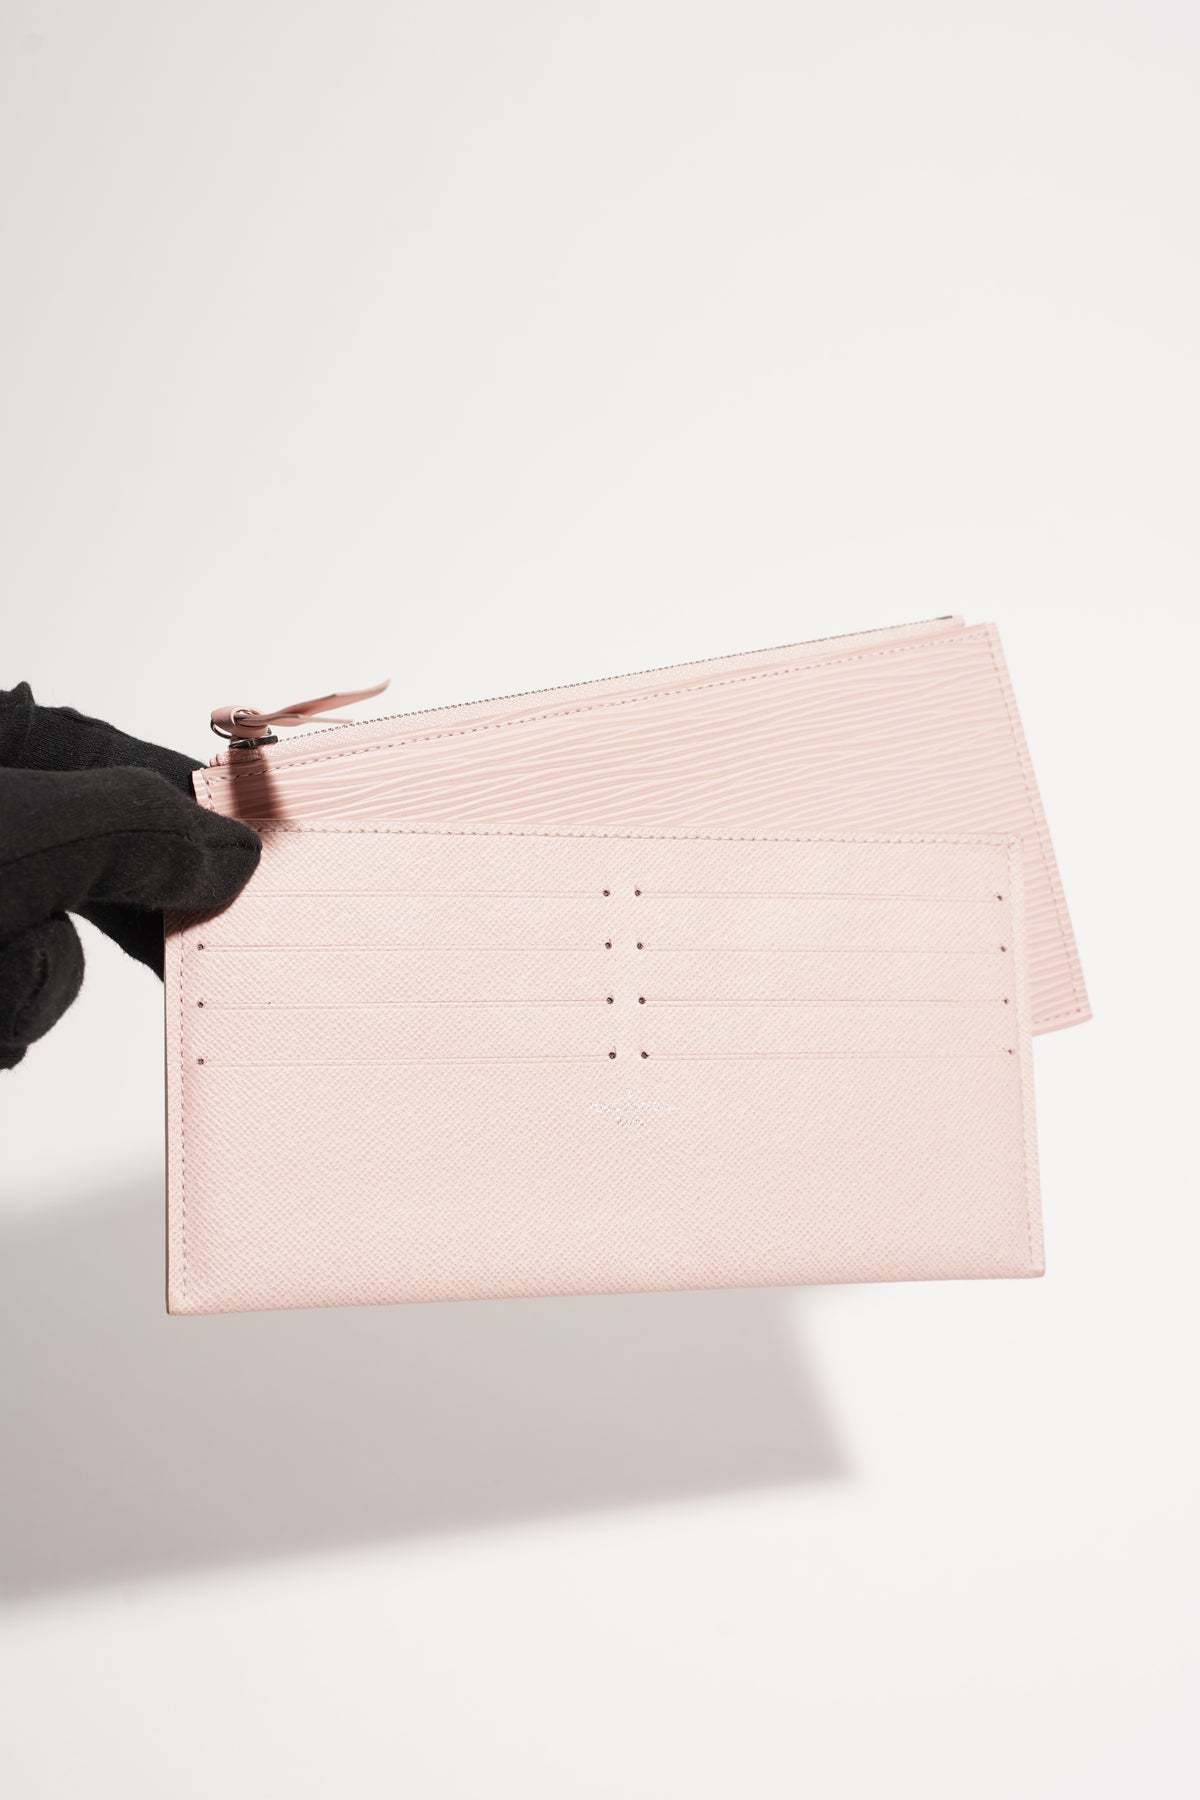 Louis Vuitton - Pochette Félicie Epi Leather Clutch Rose Balerine